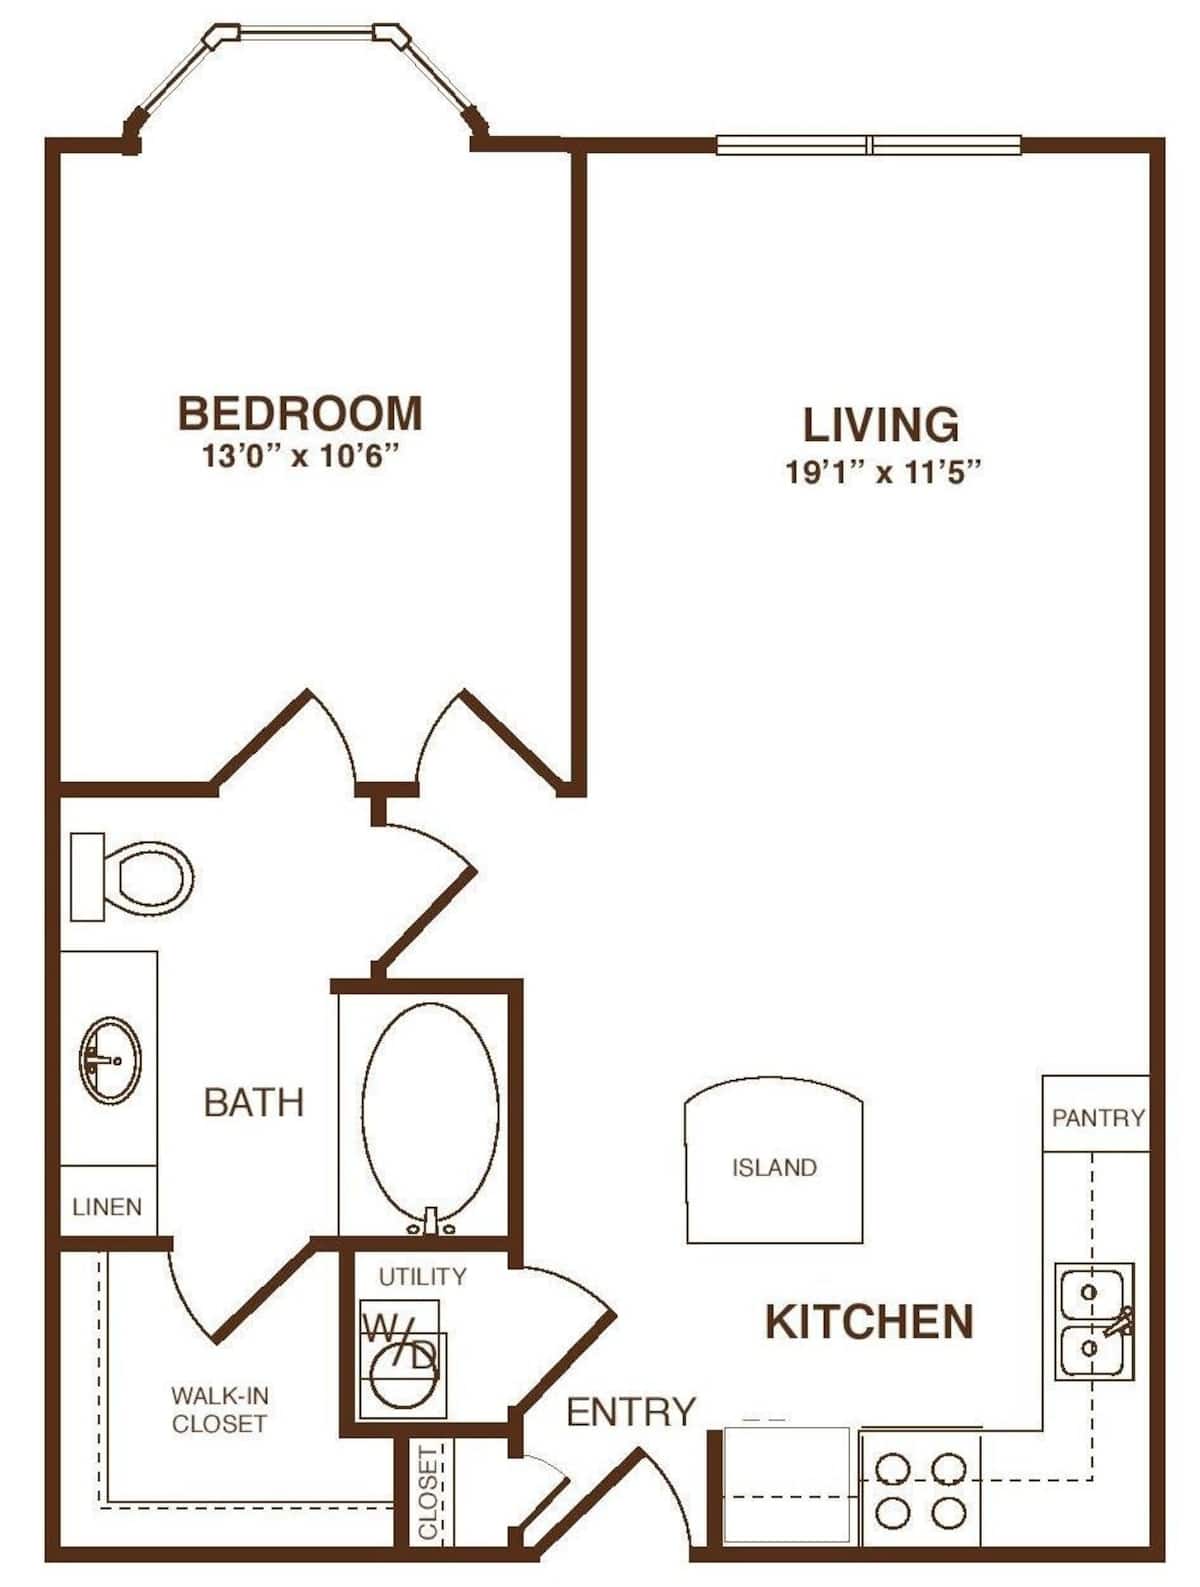 Floorplan diagram for The Bradbury, showing 1 bedroom